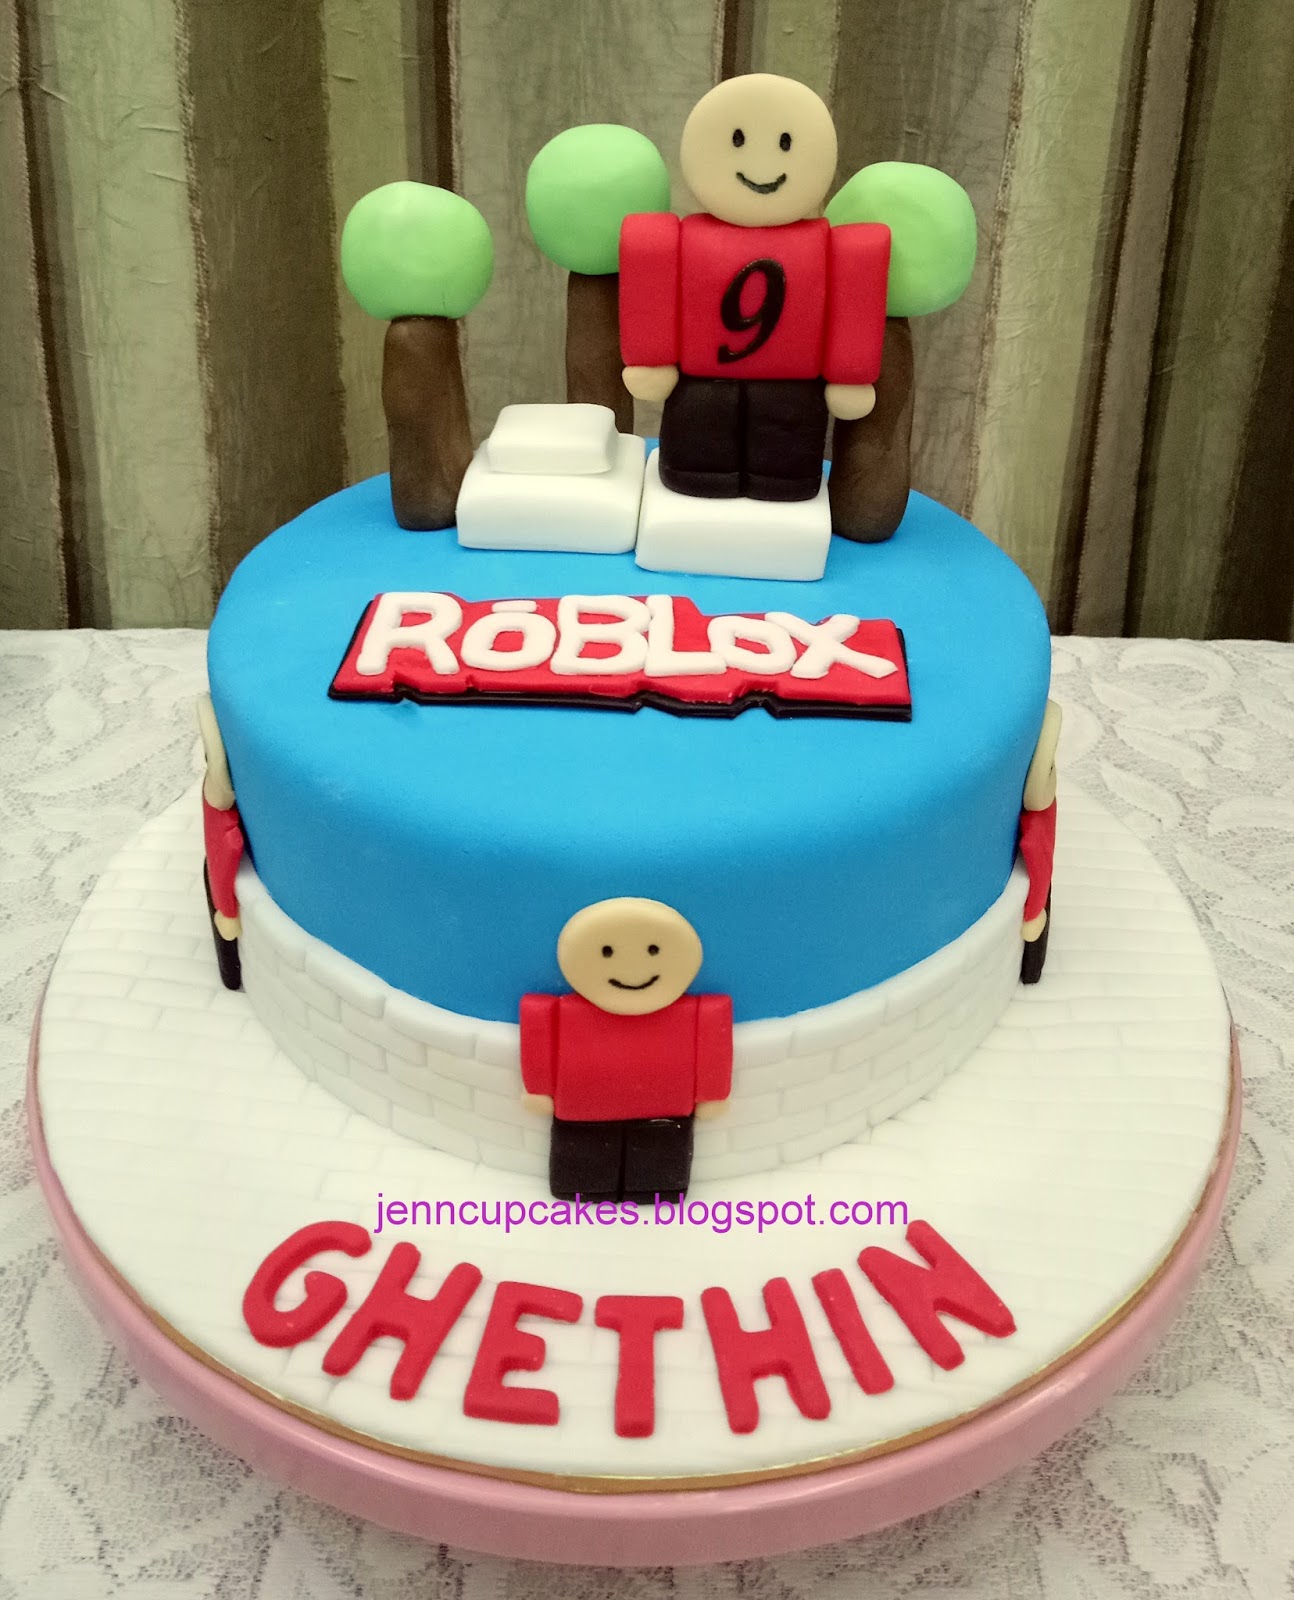 Jenn Cupcakes Muffins Roblox Cake - birthday cake roblox jailbreak cake